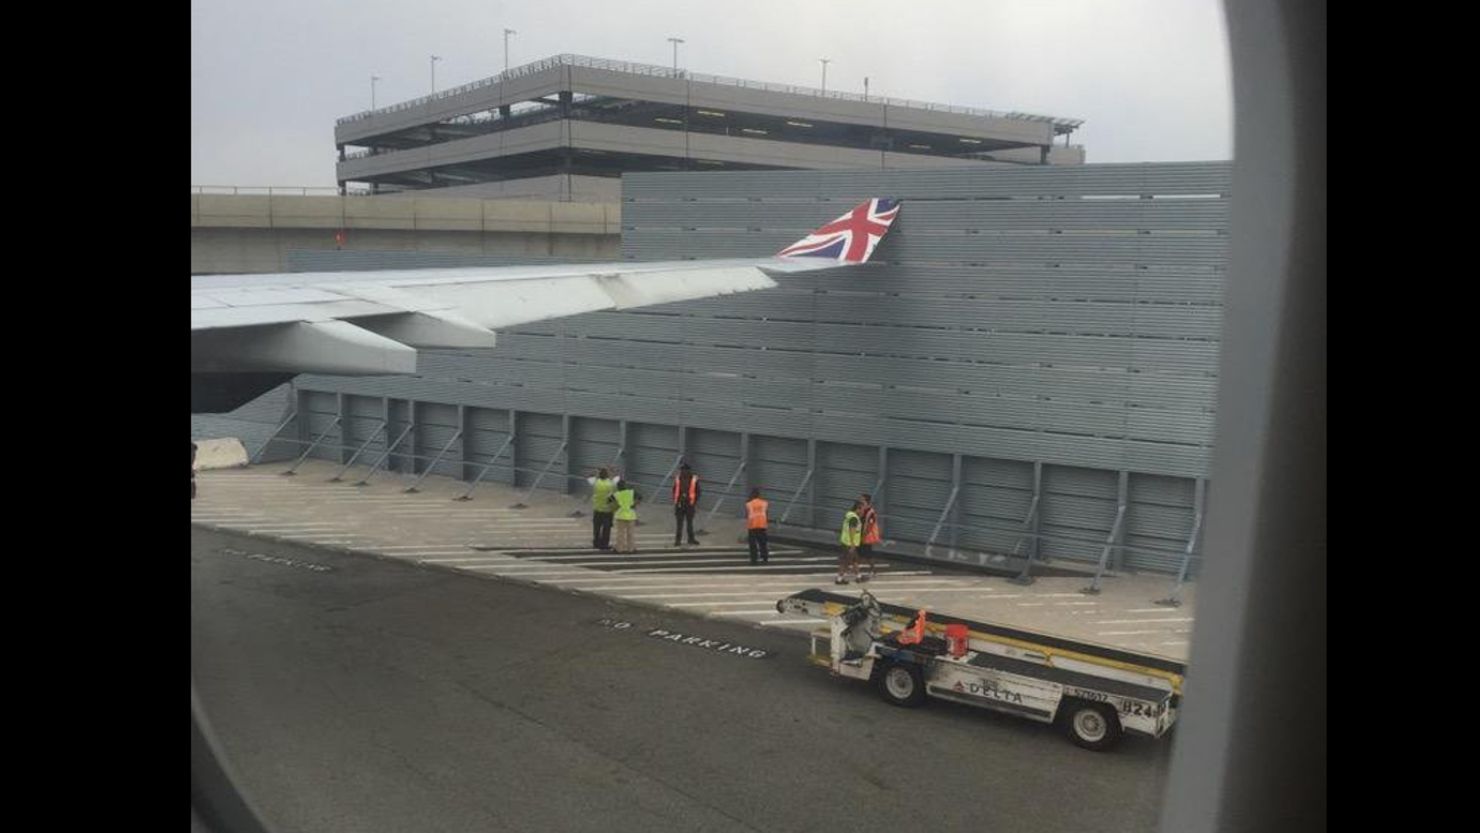 The plane "shuddered" as it hit the fence, a Virgin Atlantic flight passenger said.